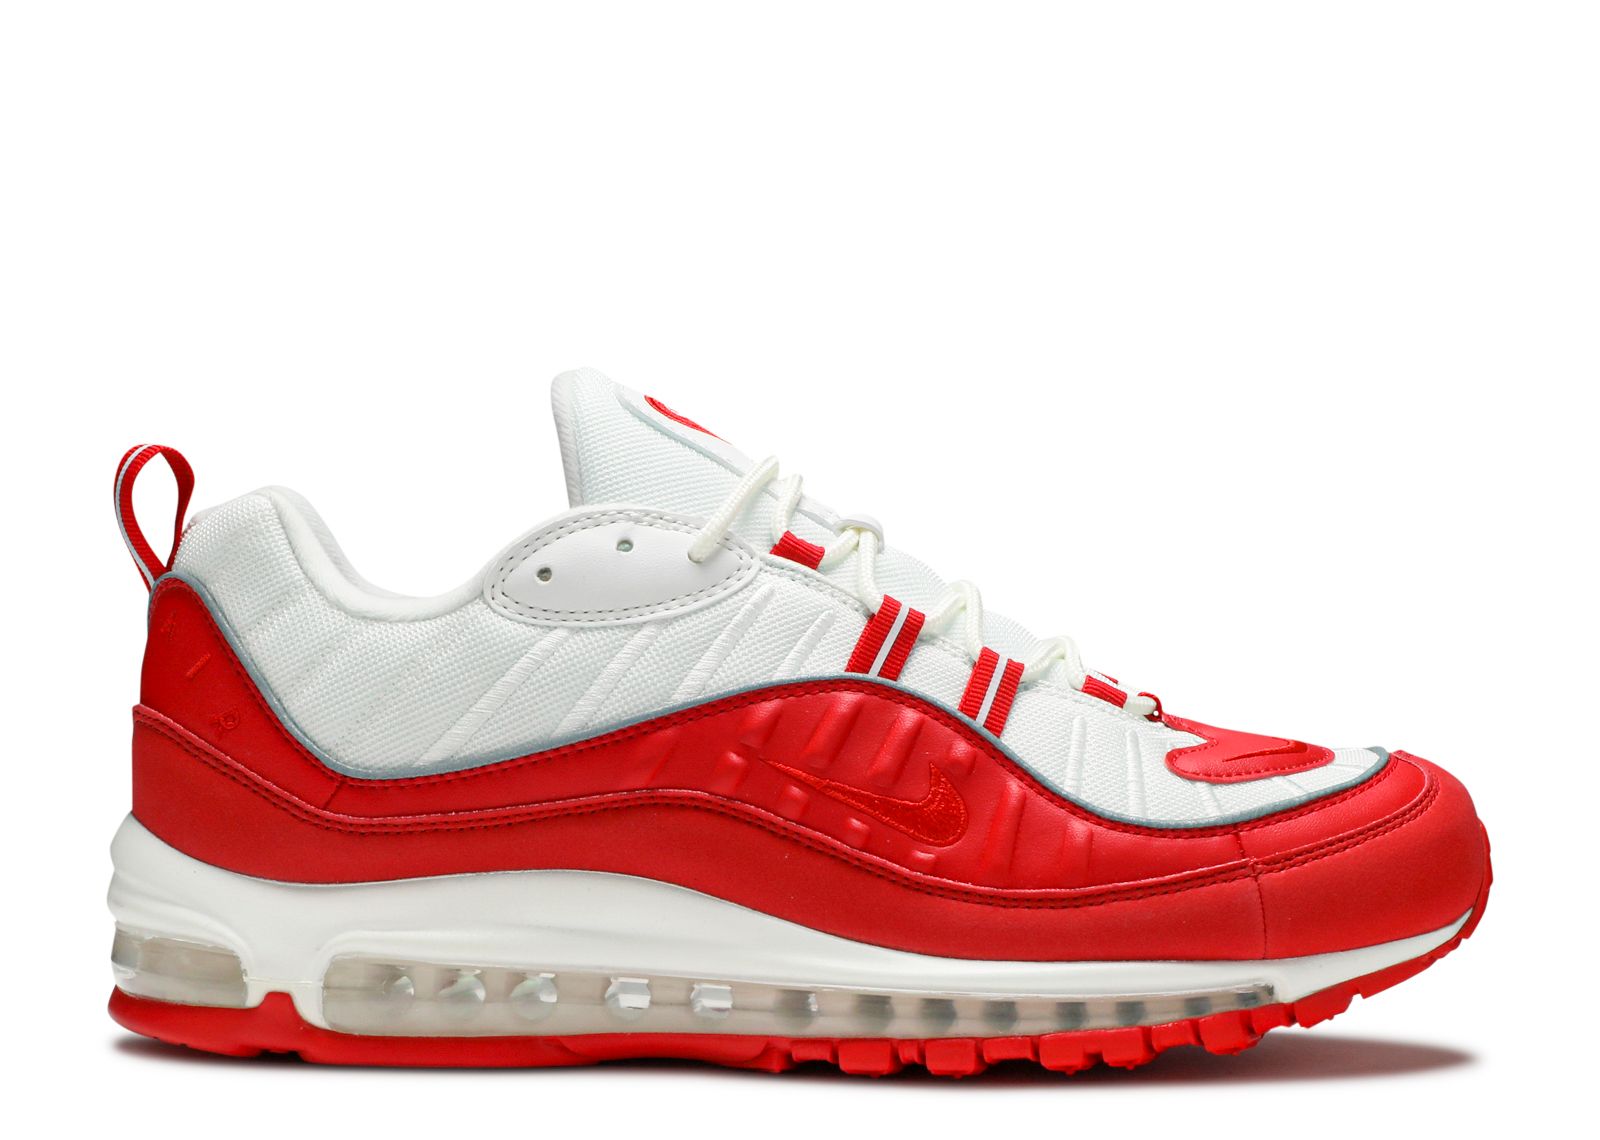 Air Max 98 'University Red' - Nike - 640744 602 - university red